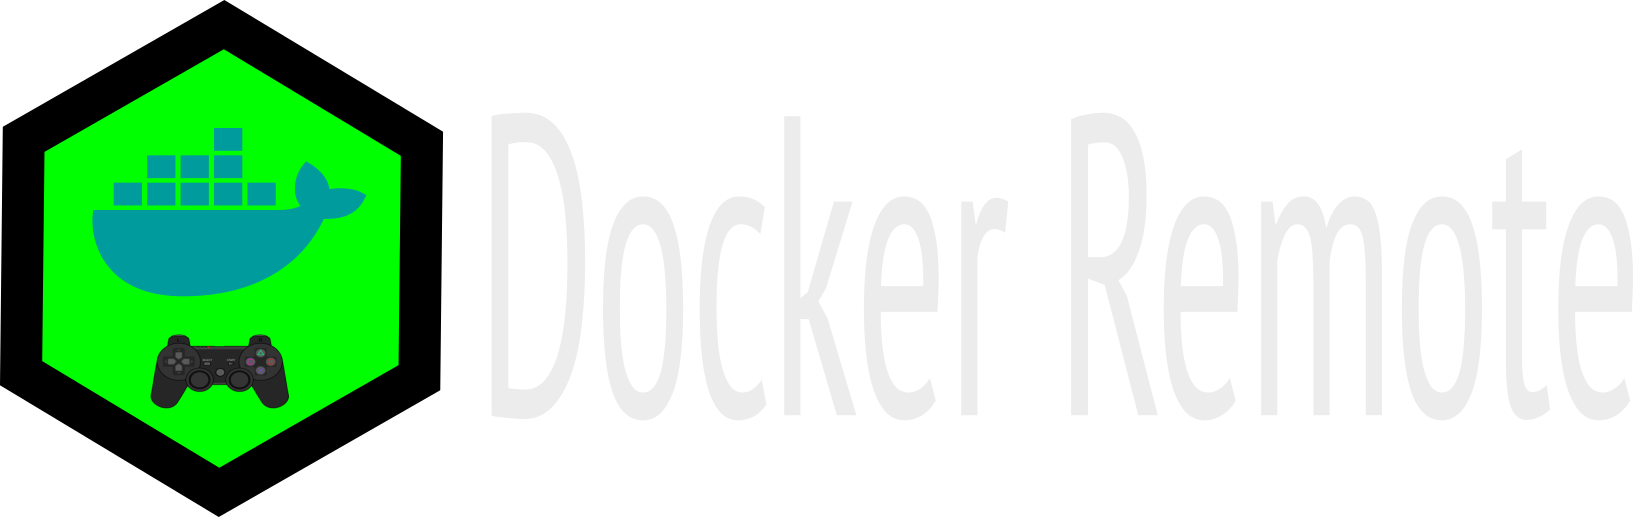 Docker Remote